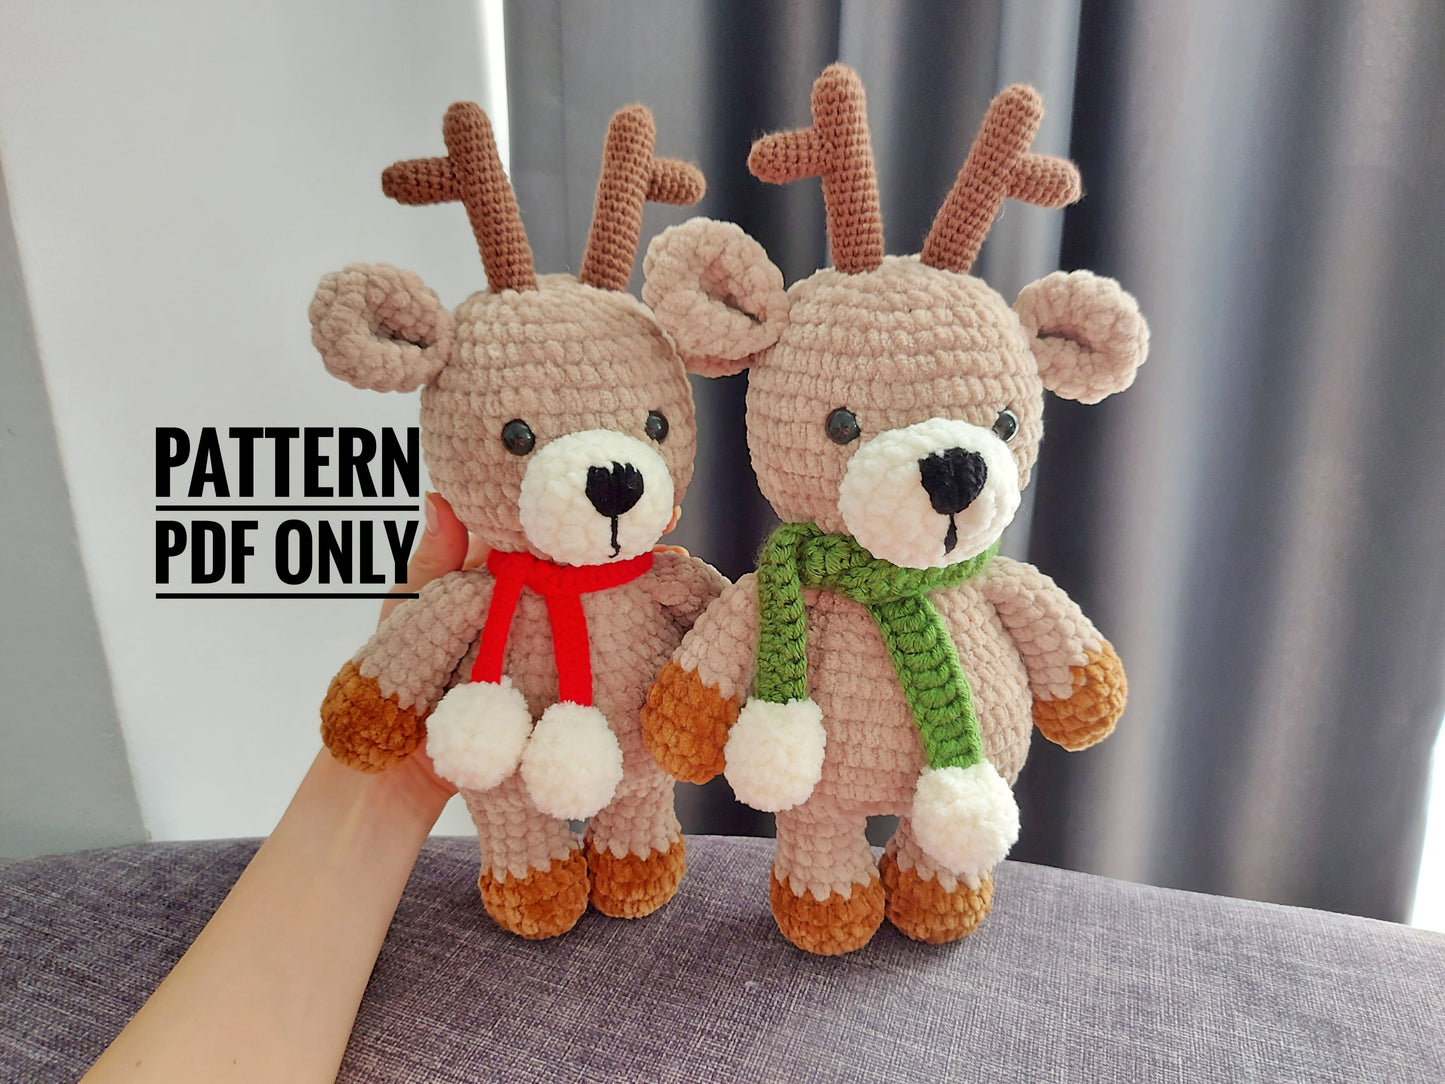 crochet deer in red scarf pattern, Christmas deer toy patern, Christmas decor, charm Christmas, Christmas gift for baby, gift for teachers